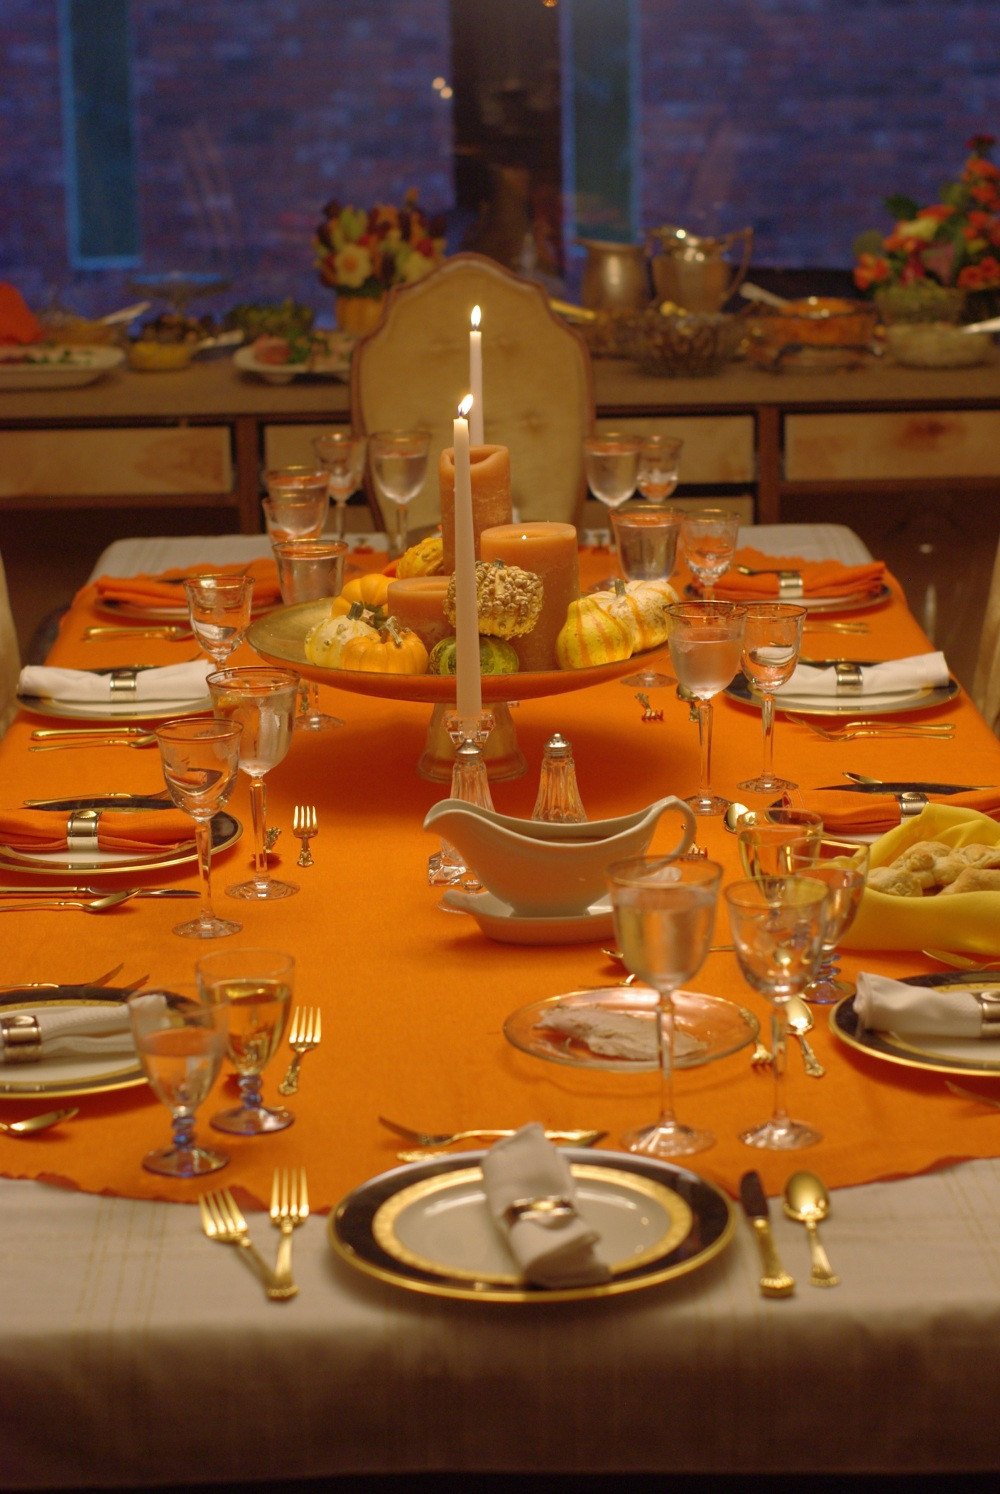 Thanksgiving Dinner Table Decorations
 5 Harvest Themed Thanksgiving Tables